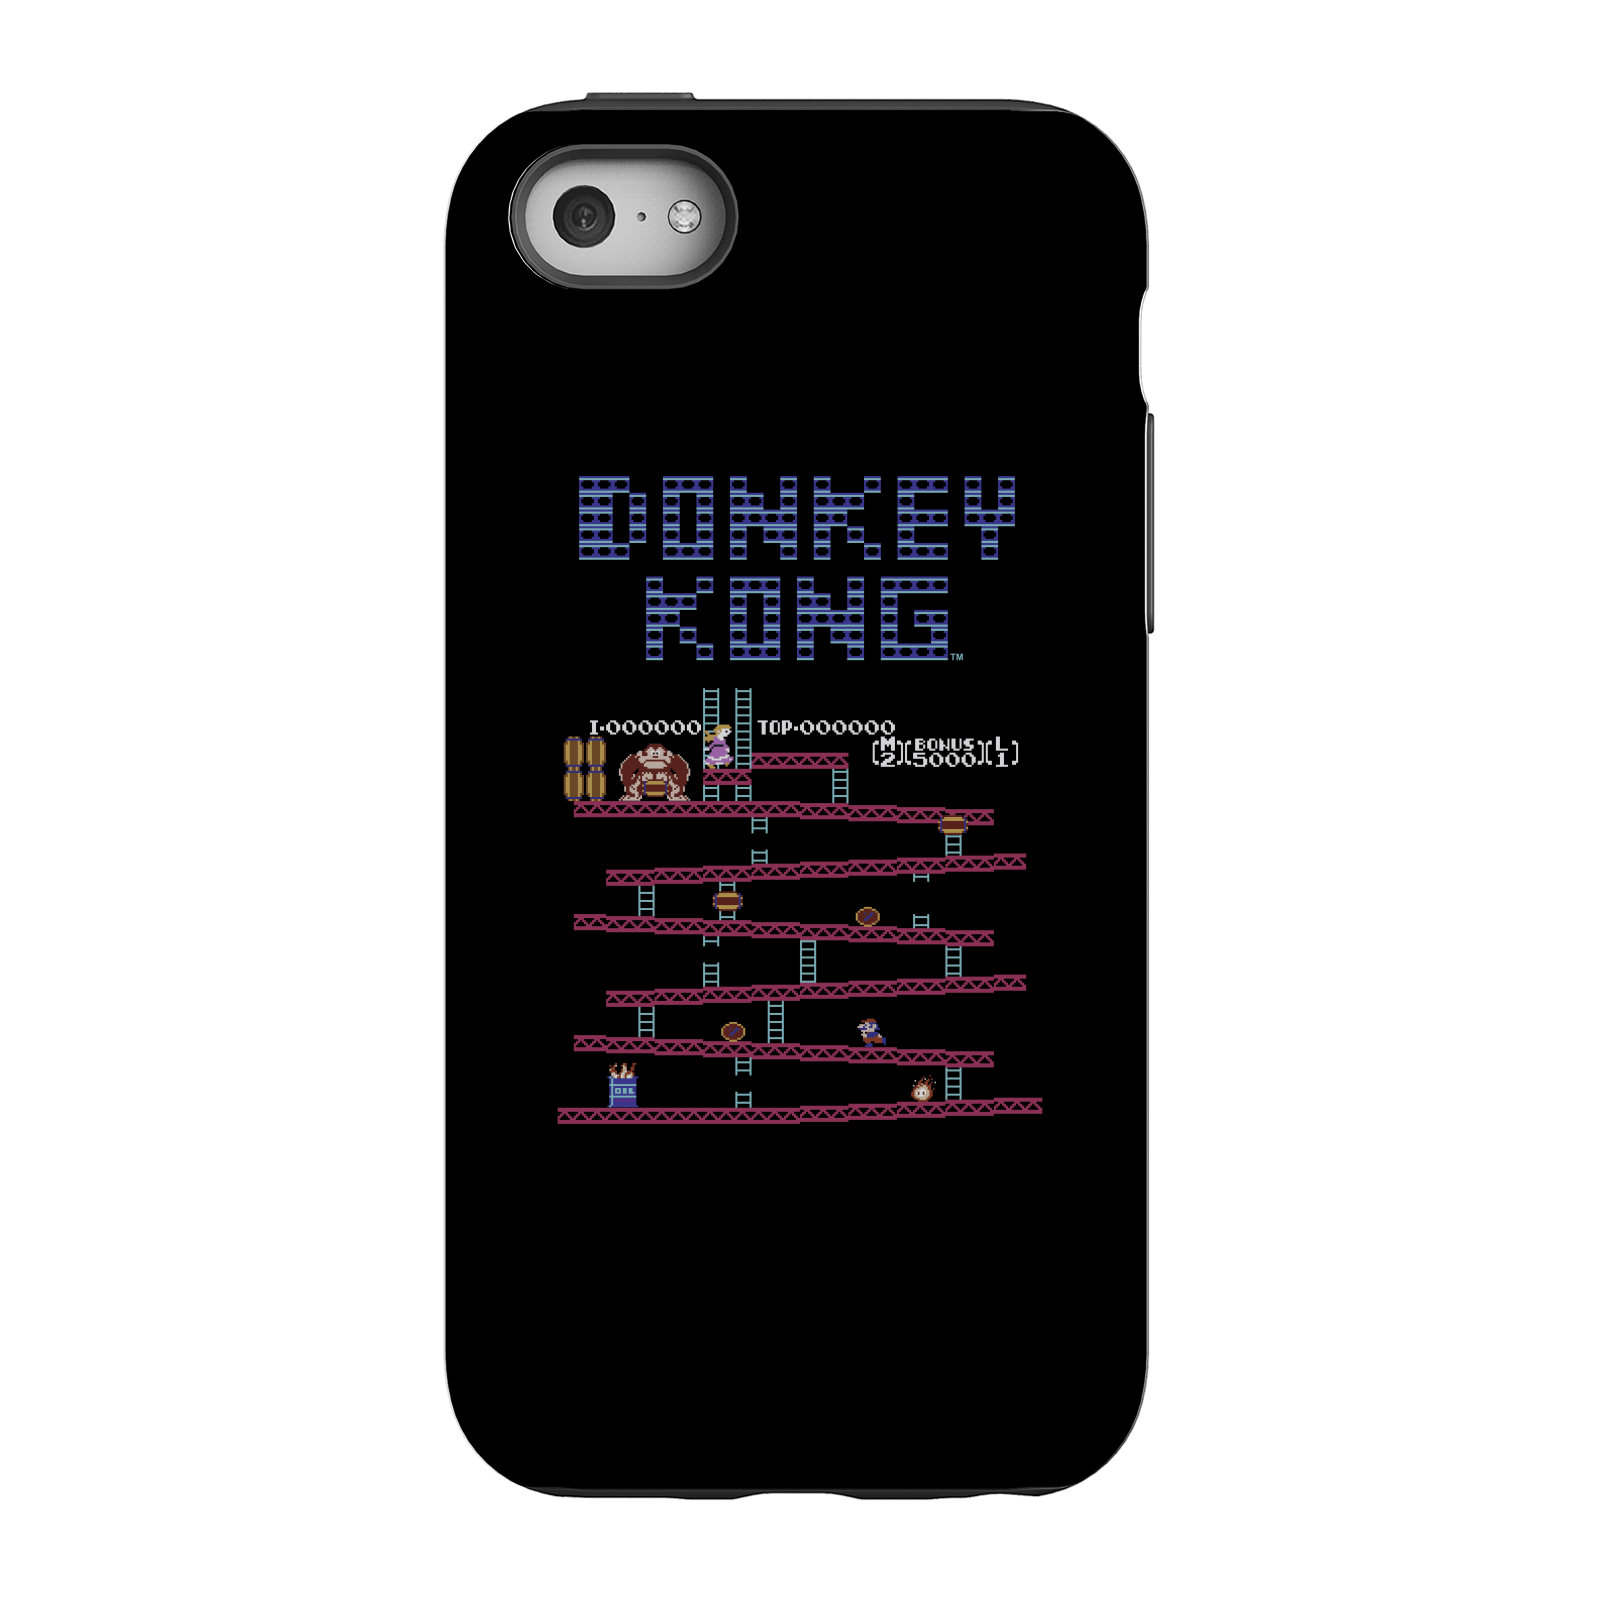 Nintendo Donkey Kong Retro Phone Case - iPhone 5C - Tough Case - Gloss